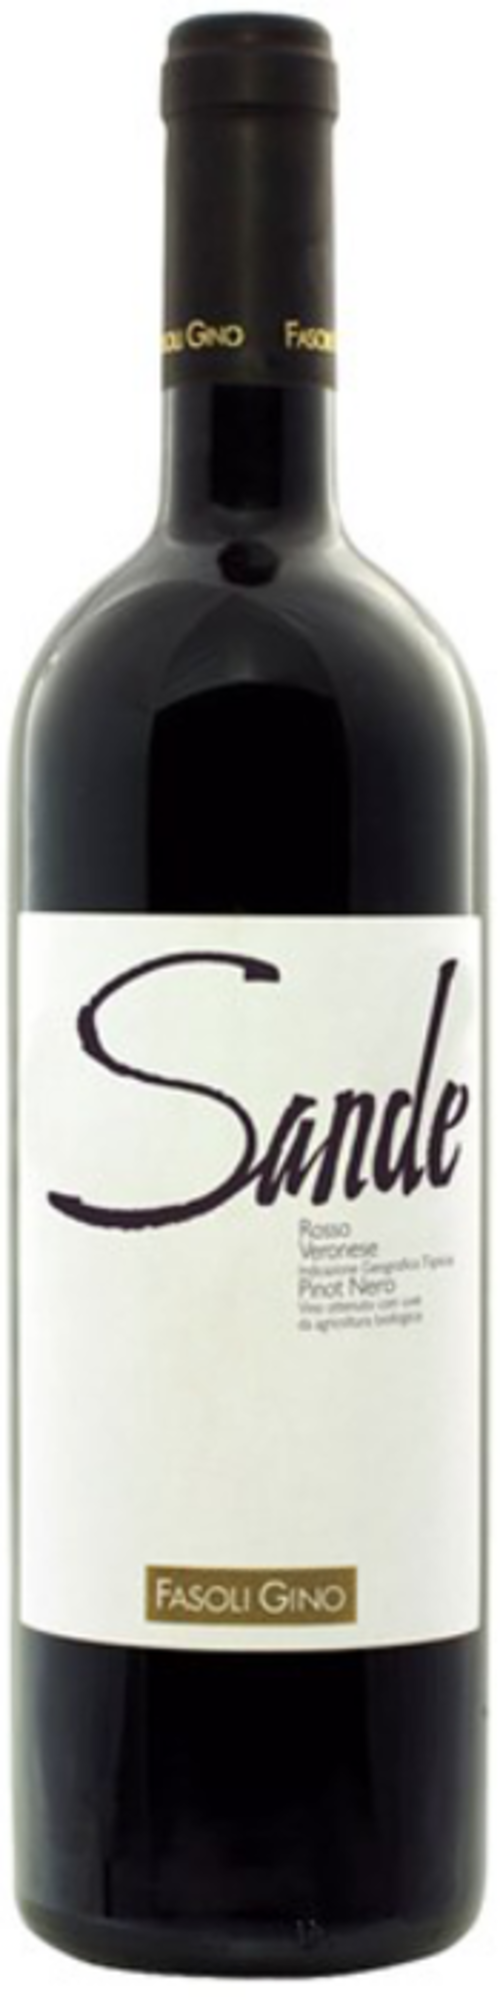 Sande - Rosso Veronese IGT Pinot Nero